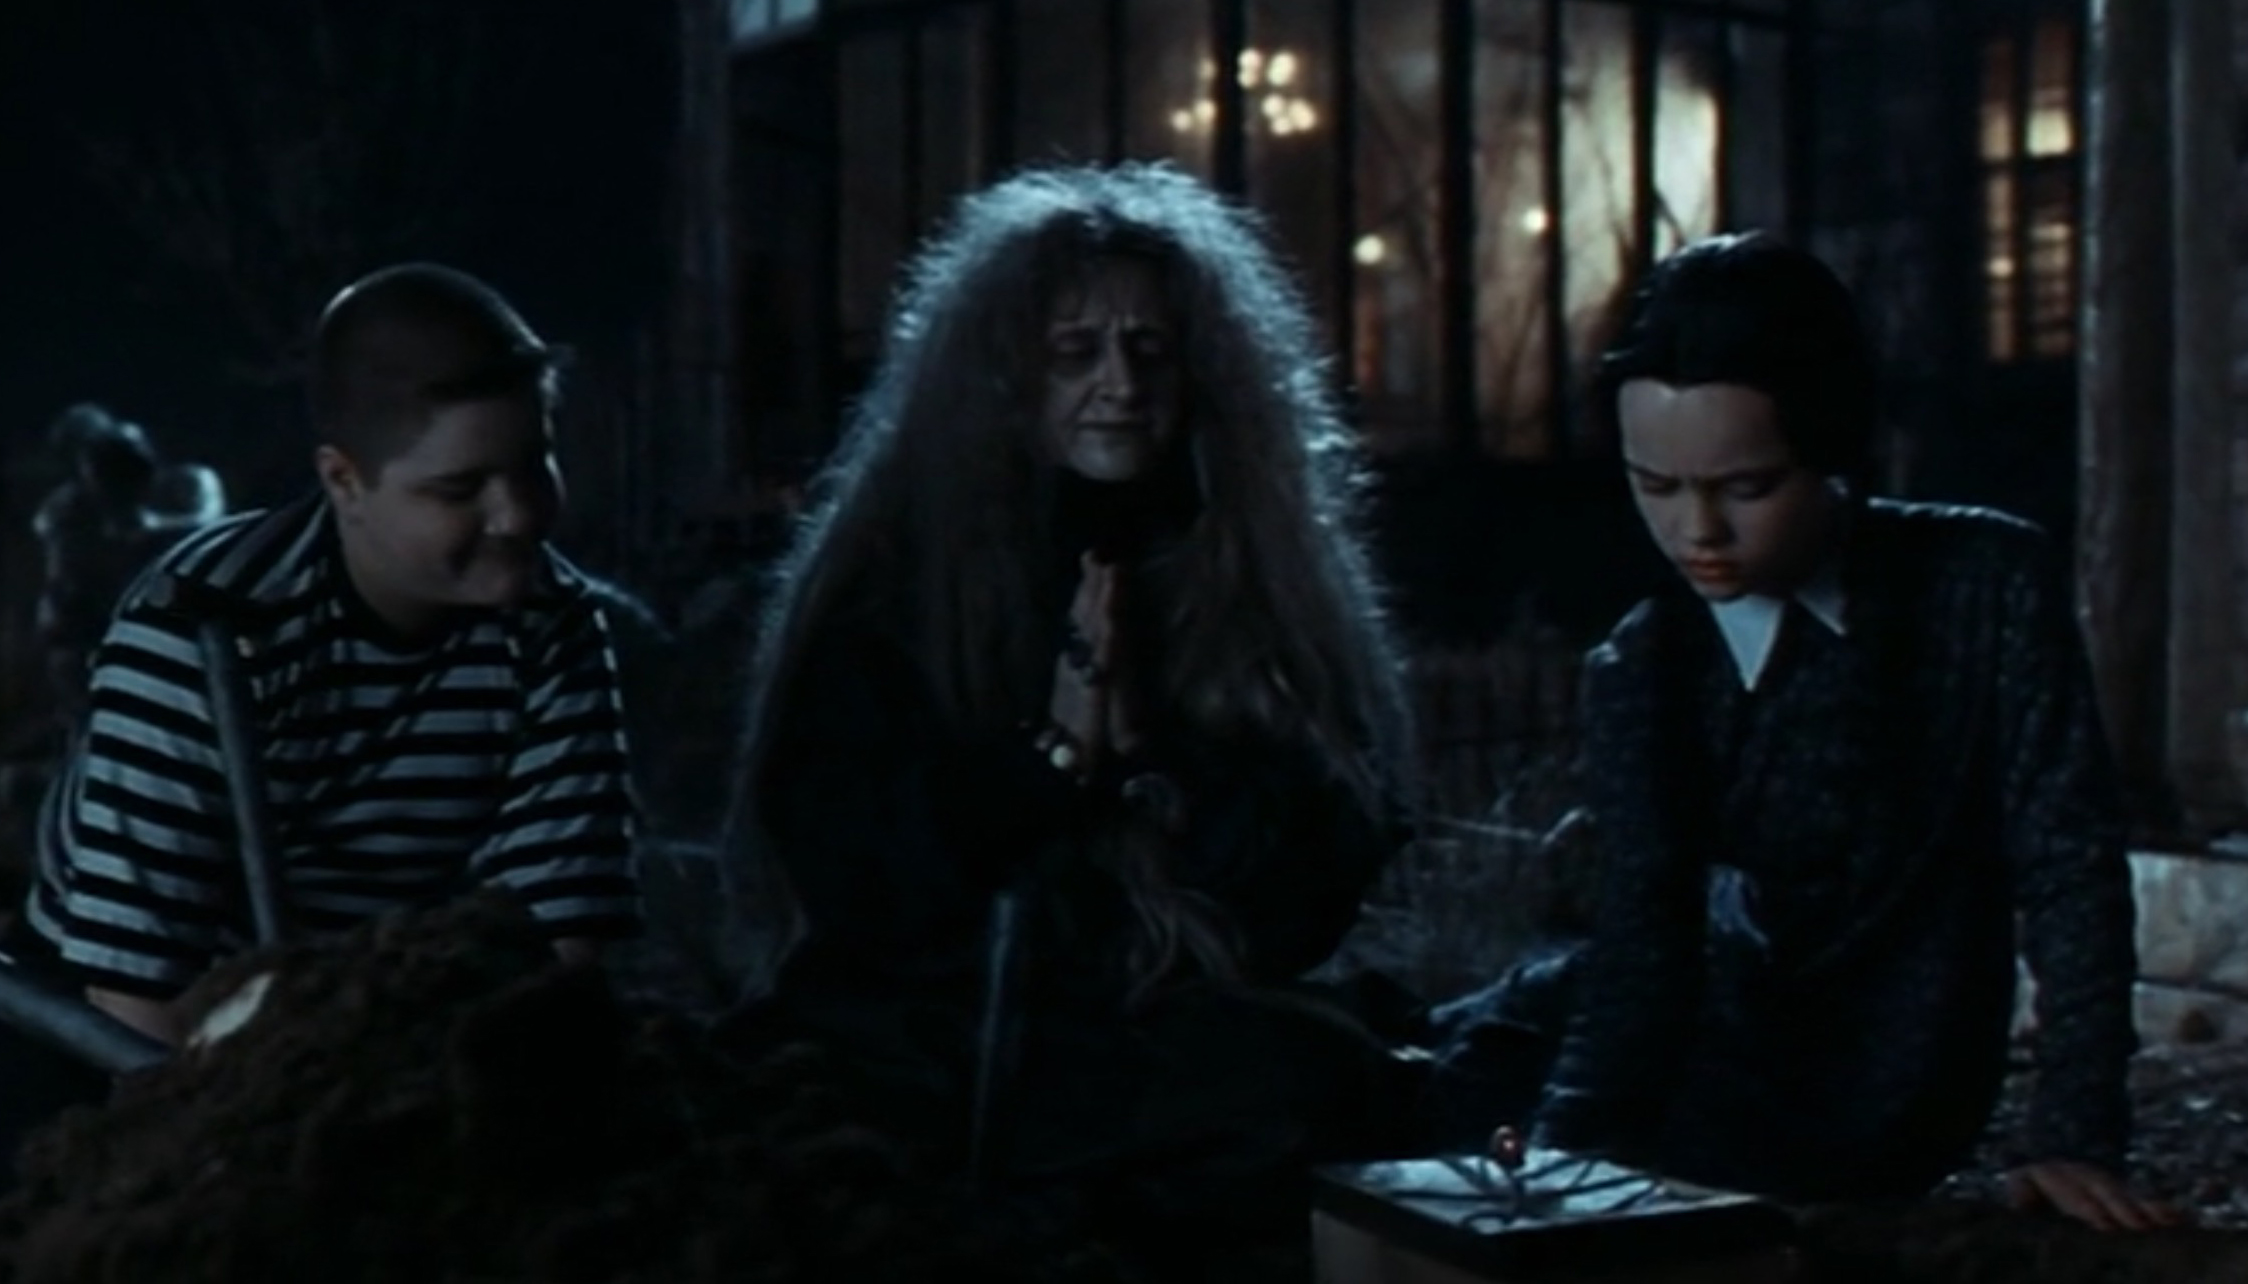 Wednesday Addams - The Addams Family